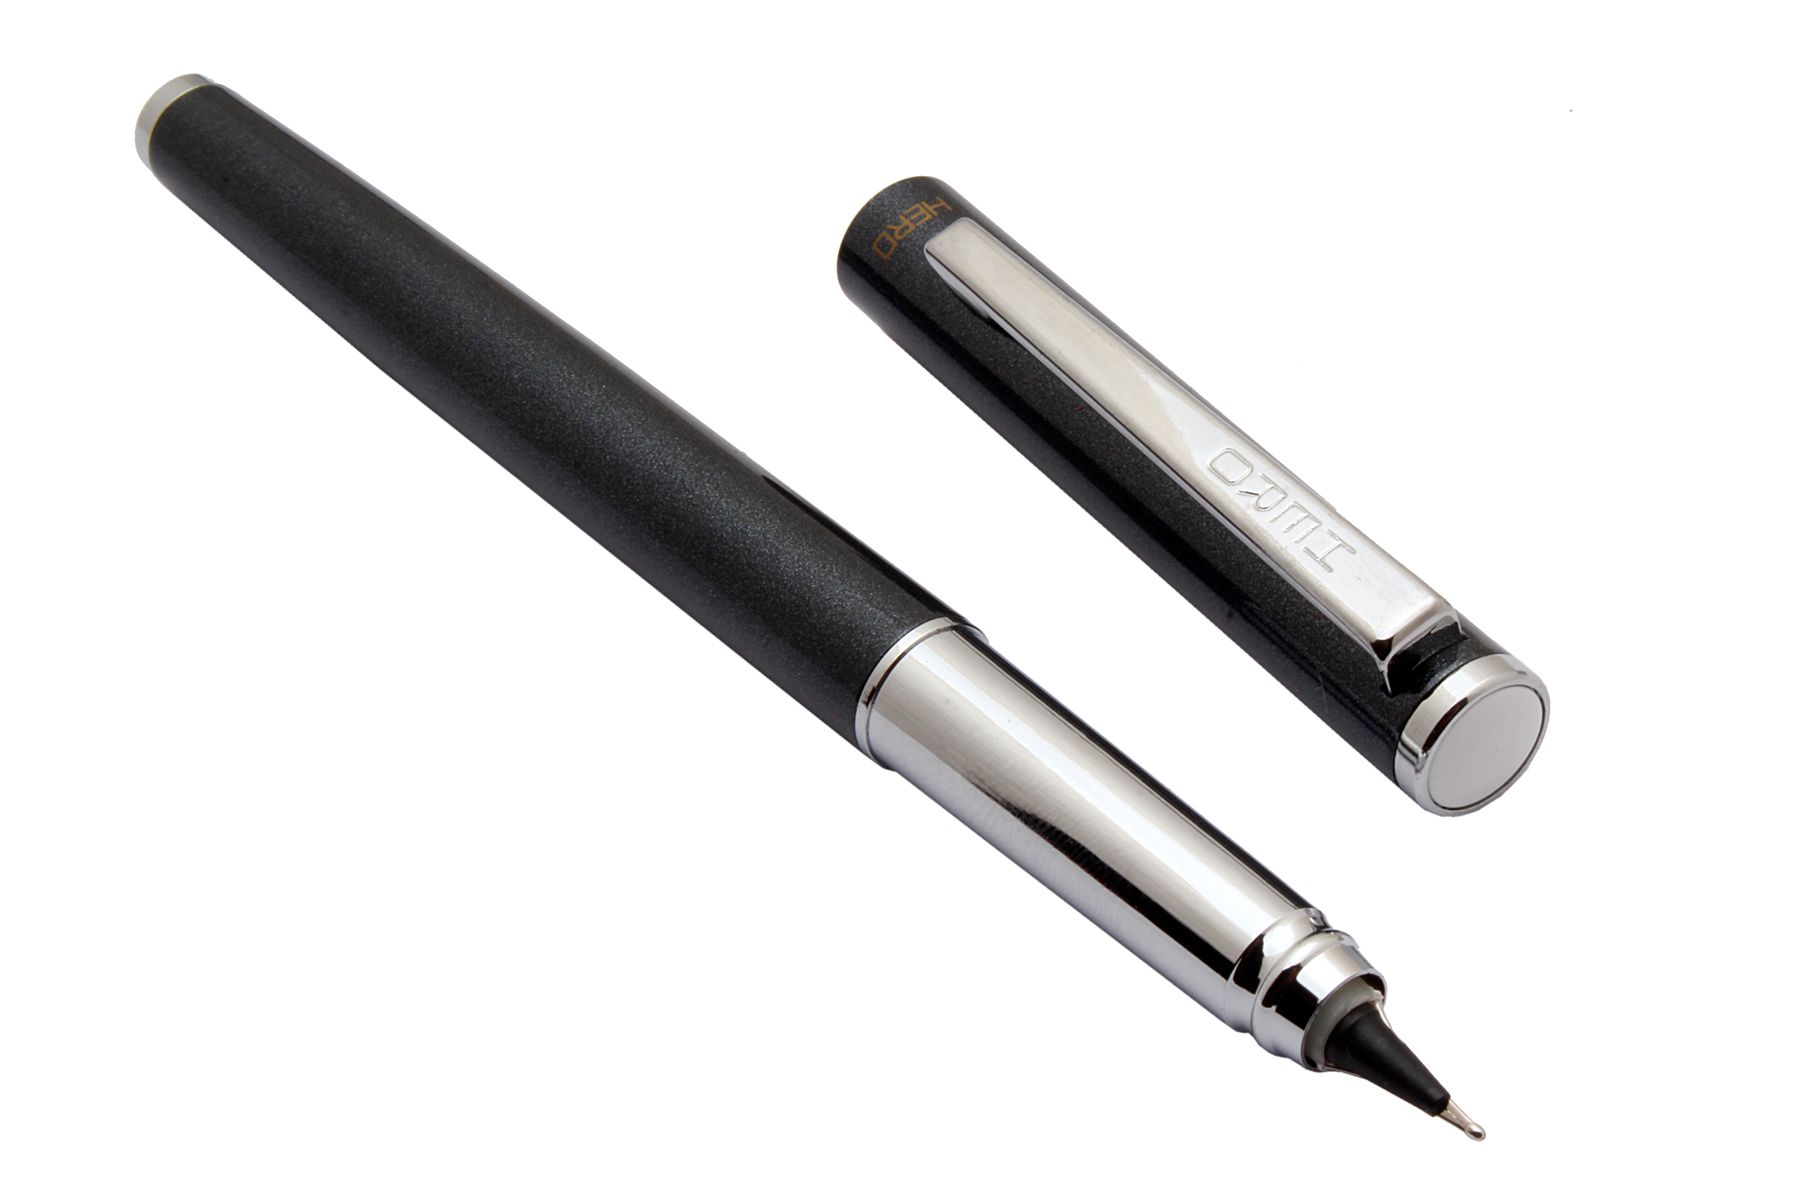     			Srpc Hero 70 All Rounder Nib Fountain Pen 360 Degree Angle Writing Black Color Metal Body & Chrome trims